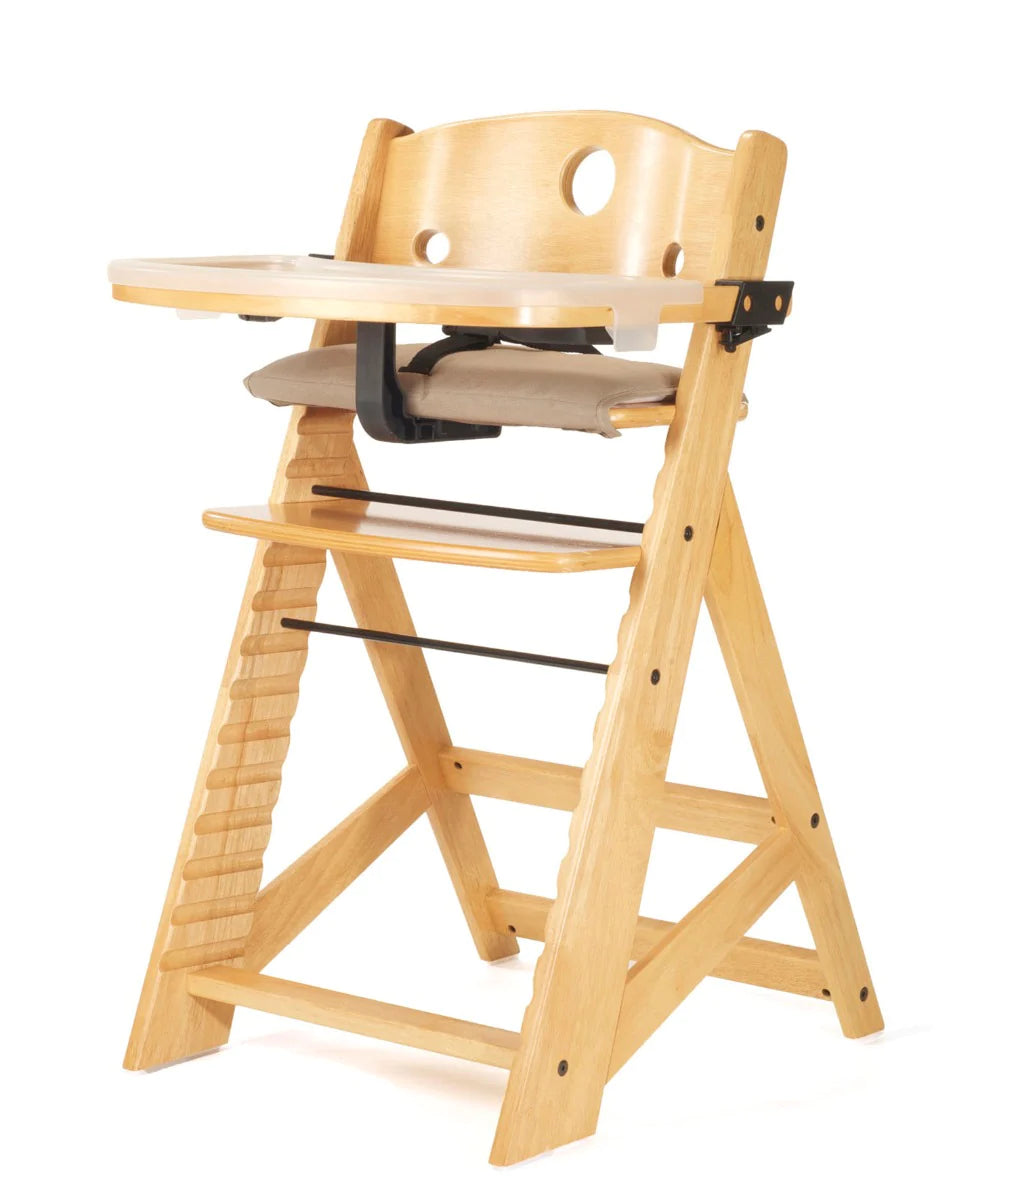 Keekaroo Wooden High Chair - Natural